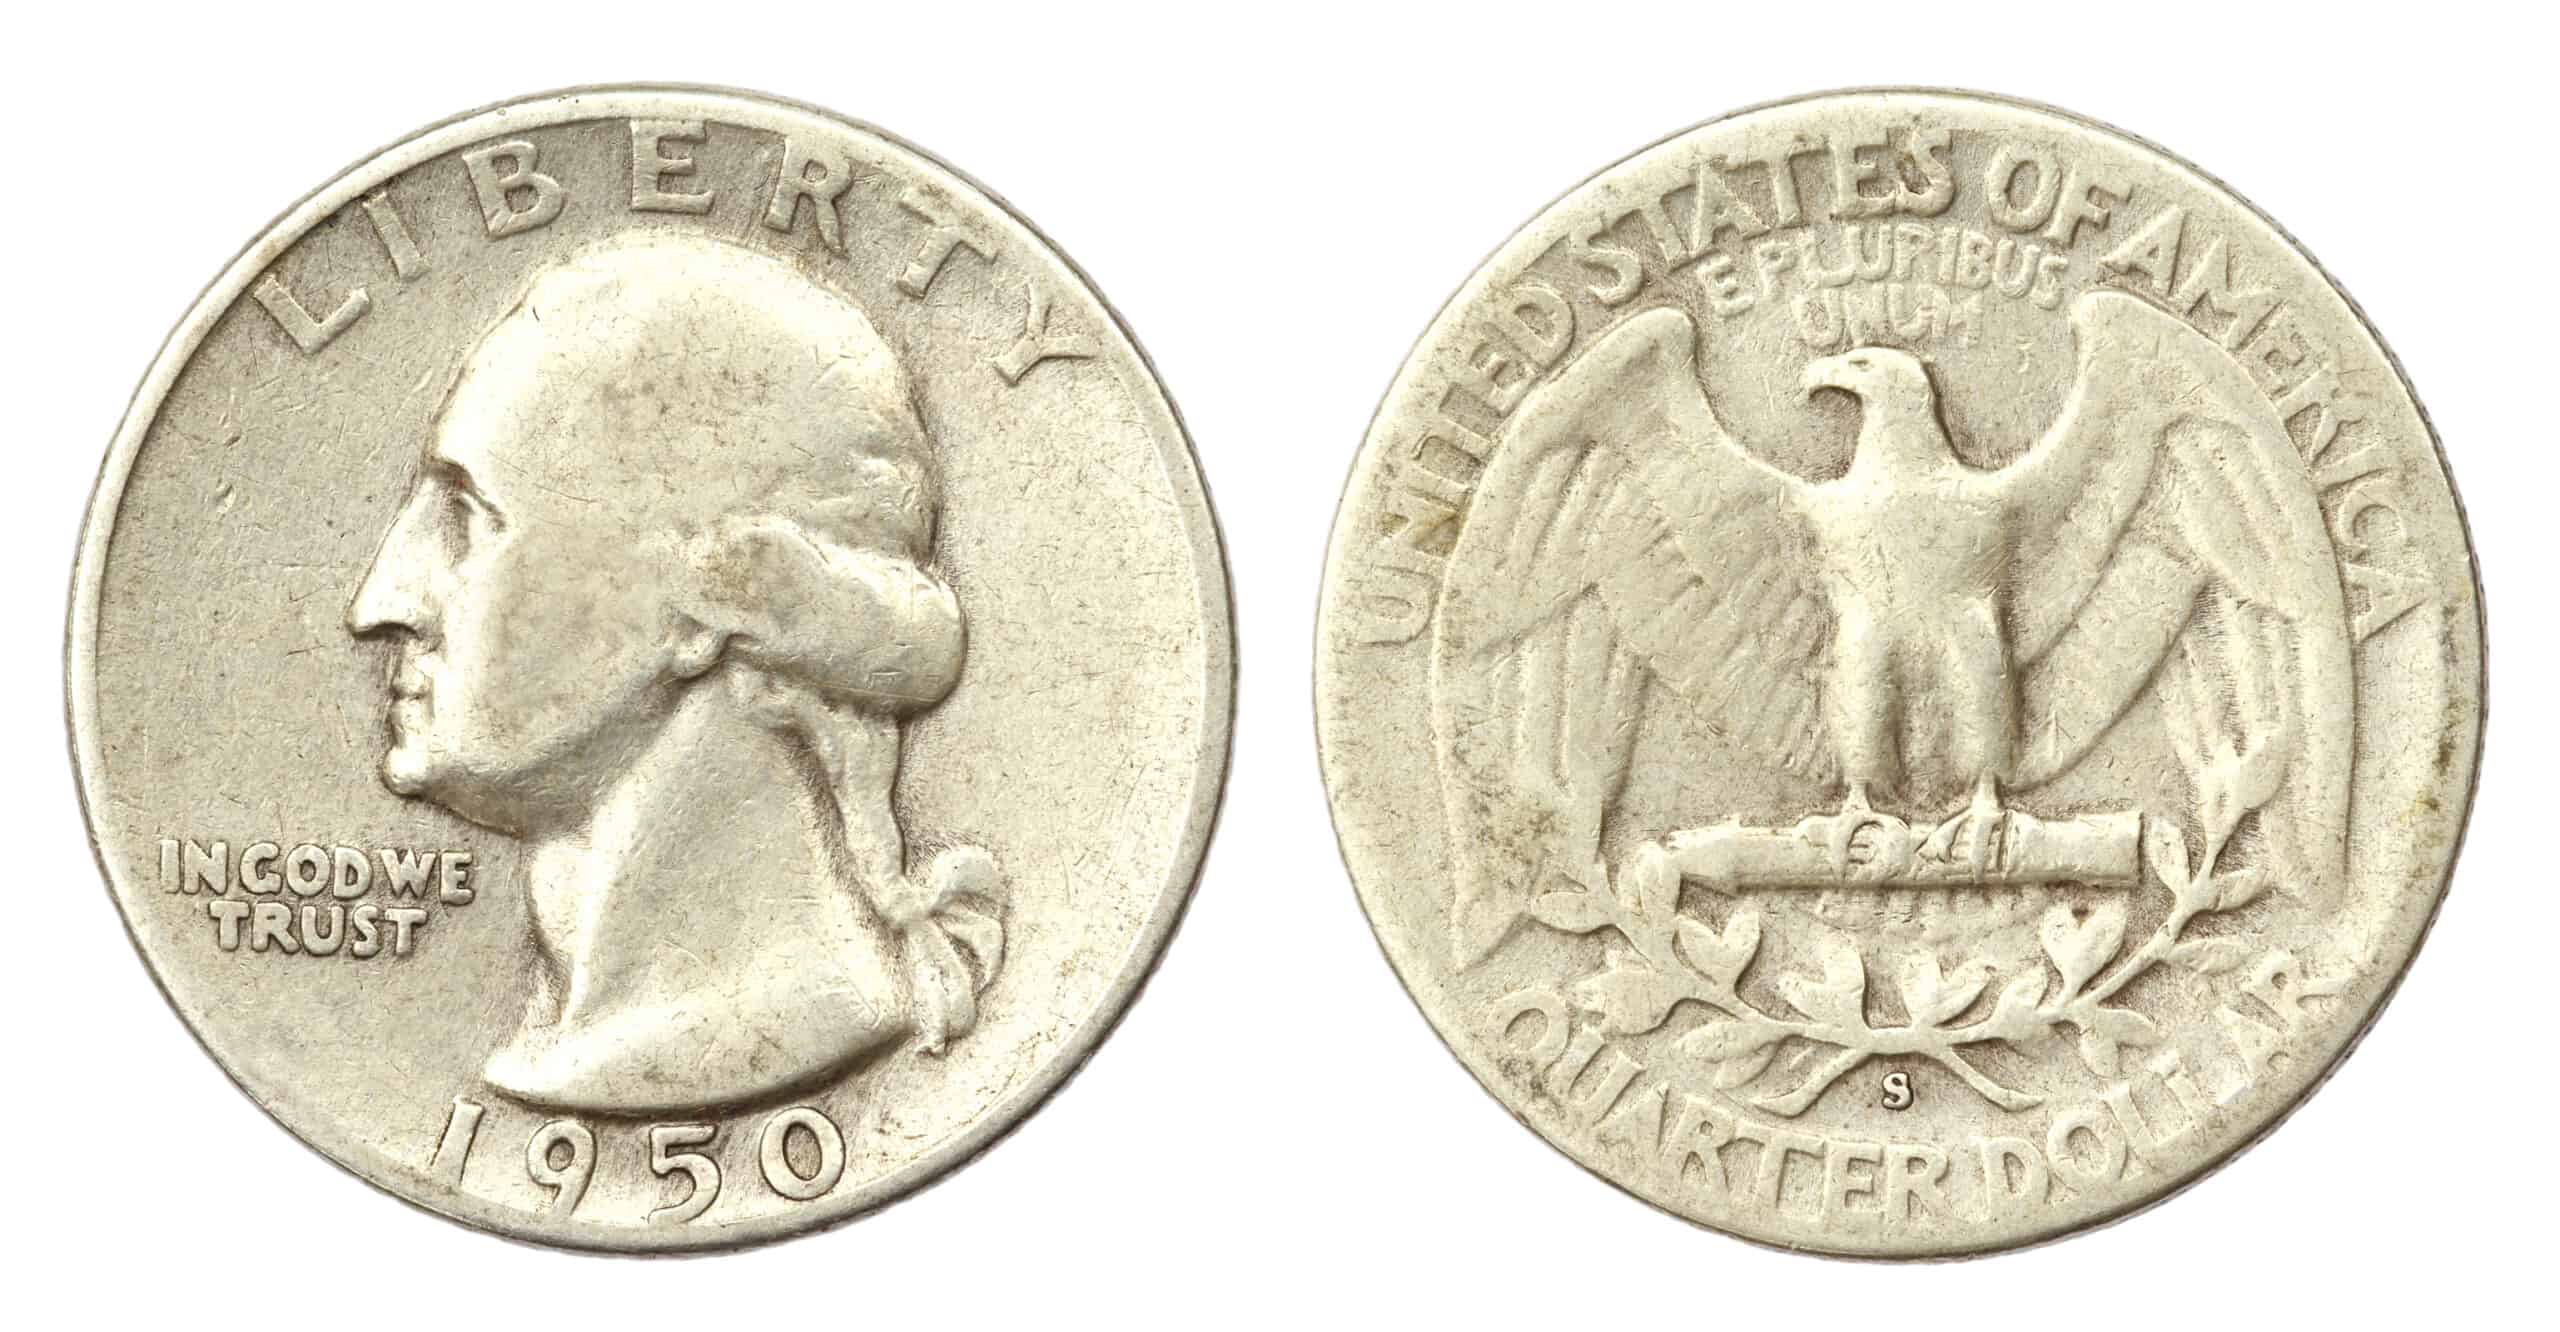 1950 Quarter worth money